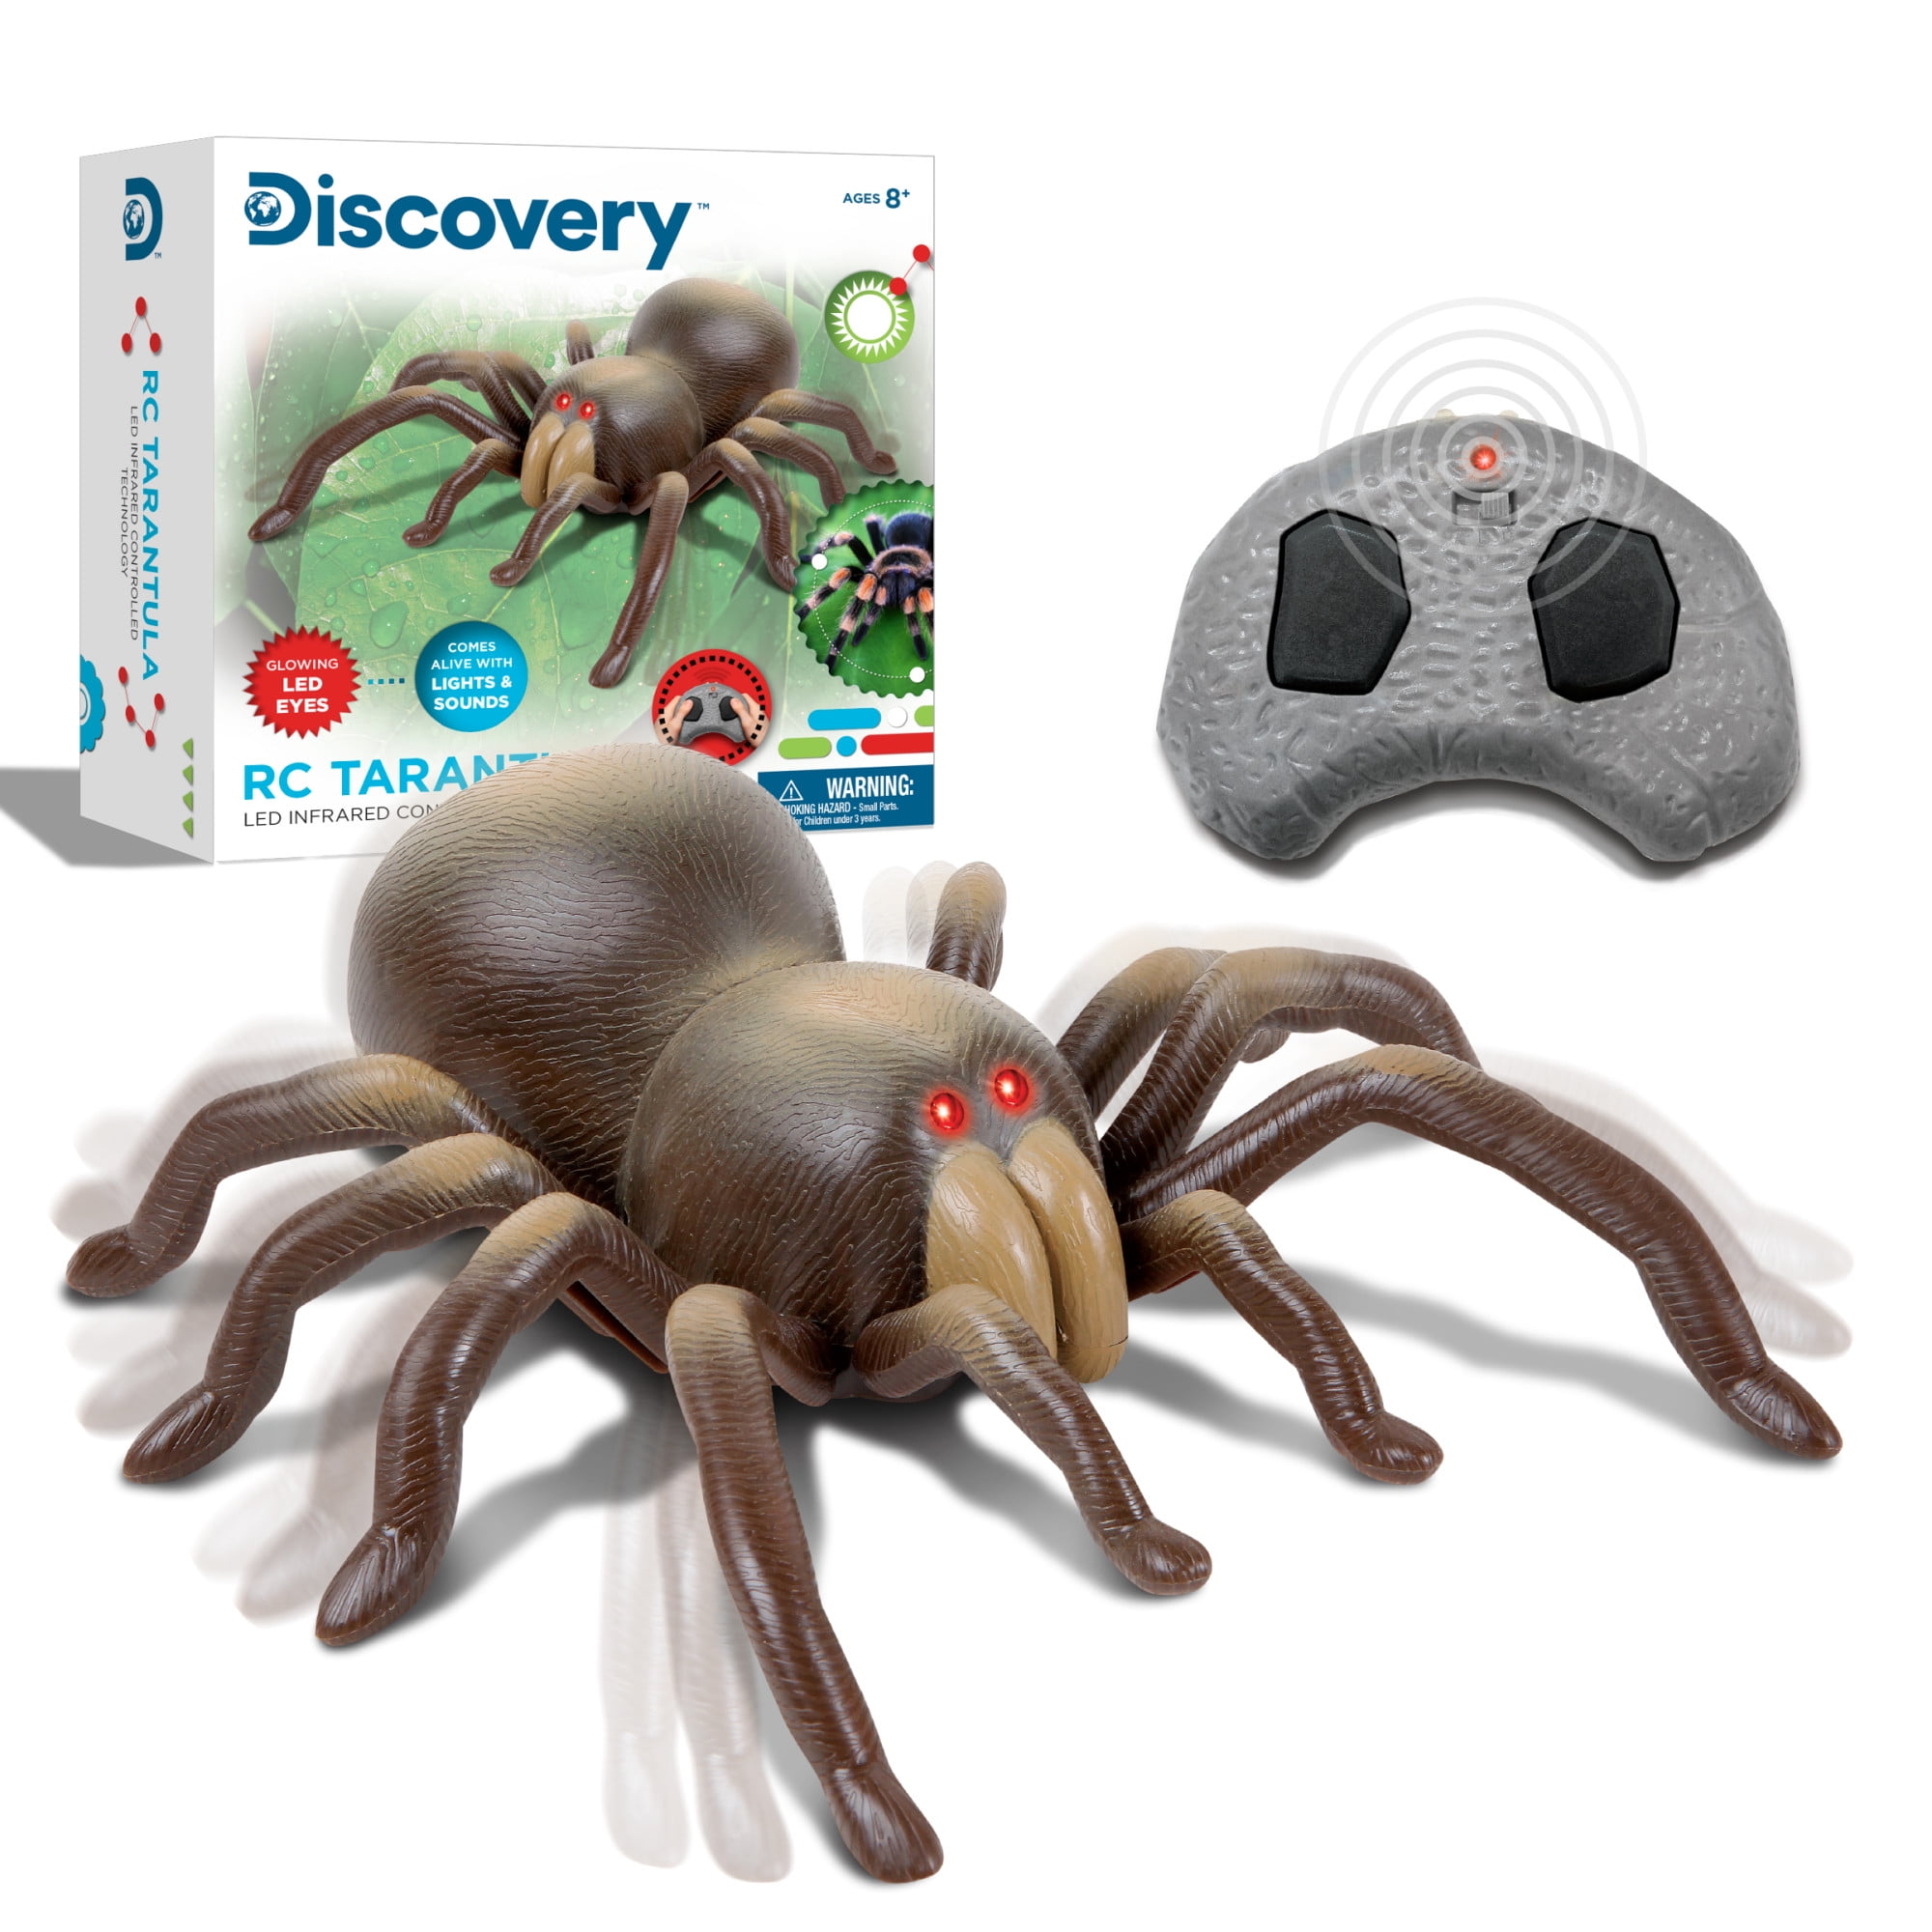 Radio Control  RC Tarantula Spider Realistic Toy NEW Fast Shipping 